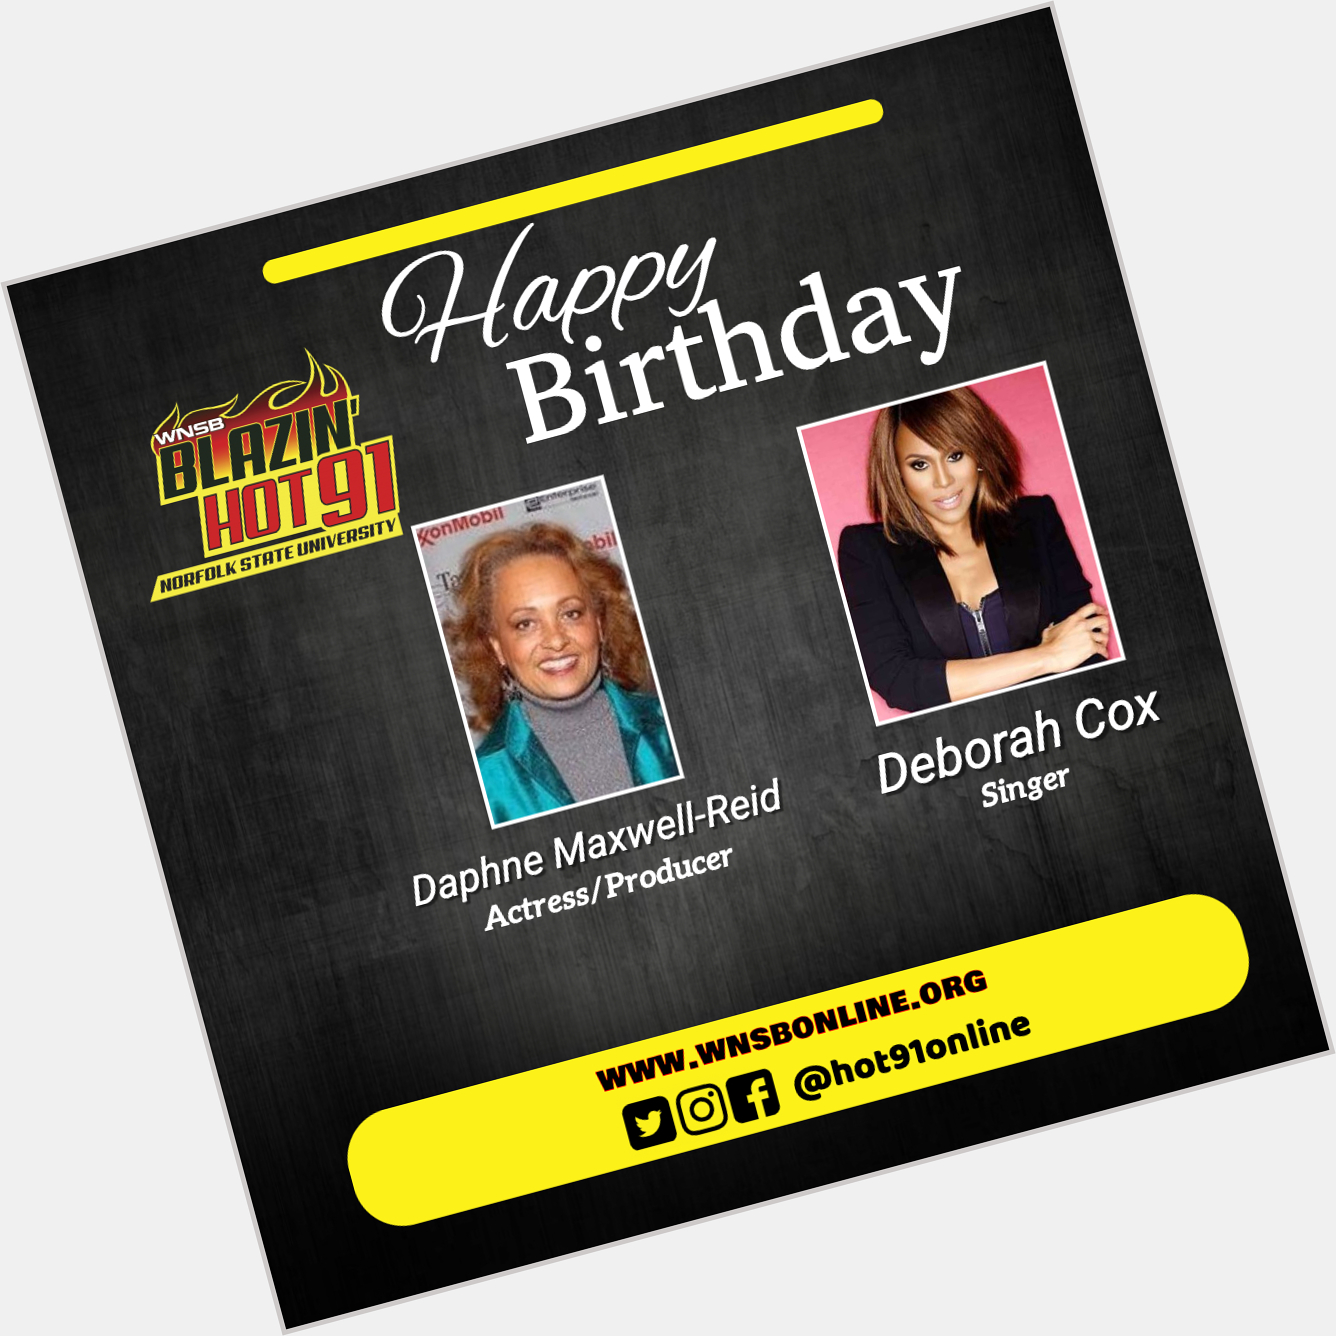 Happy Blazin\ Hot Birthday to Daphne Maxwell-Reid and Deborah Cox  